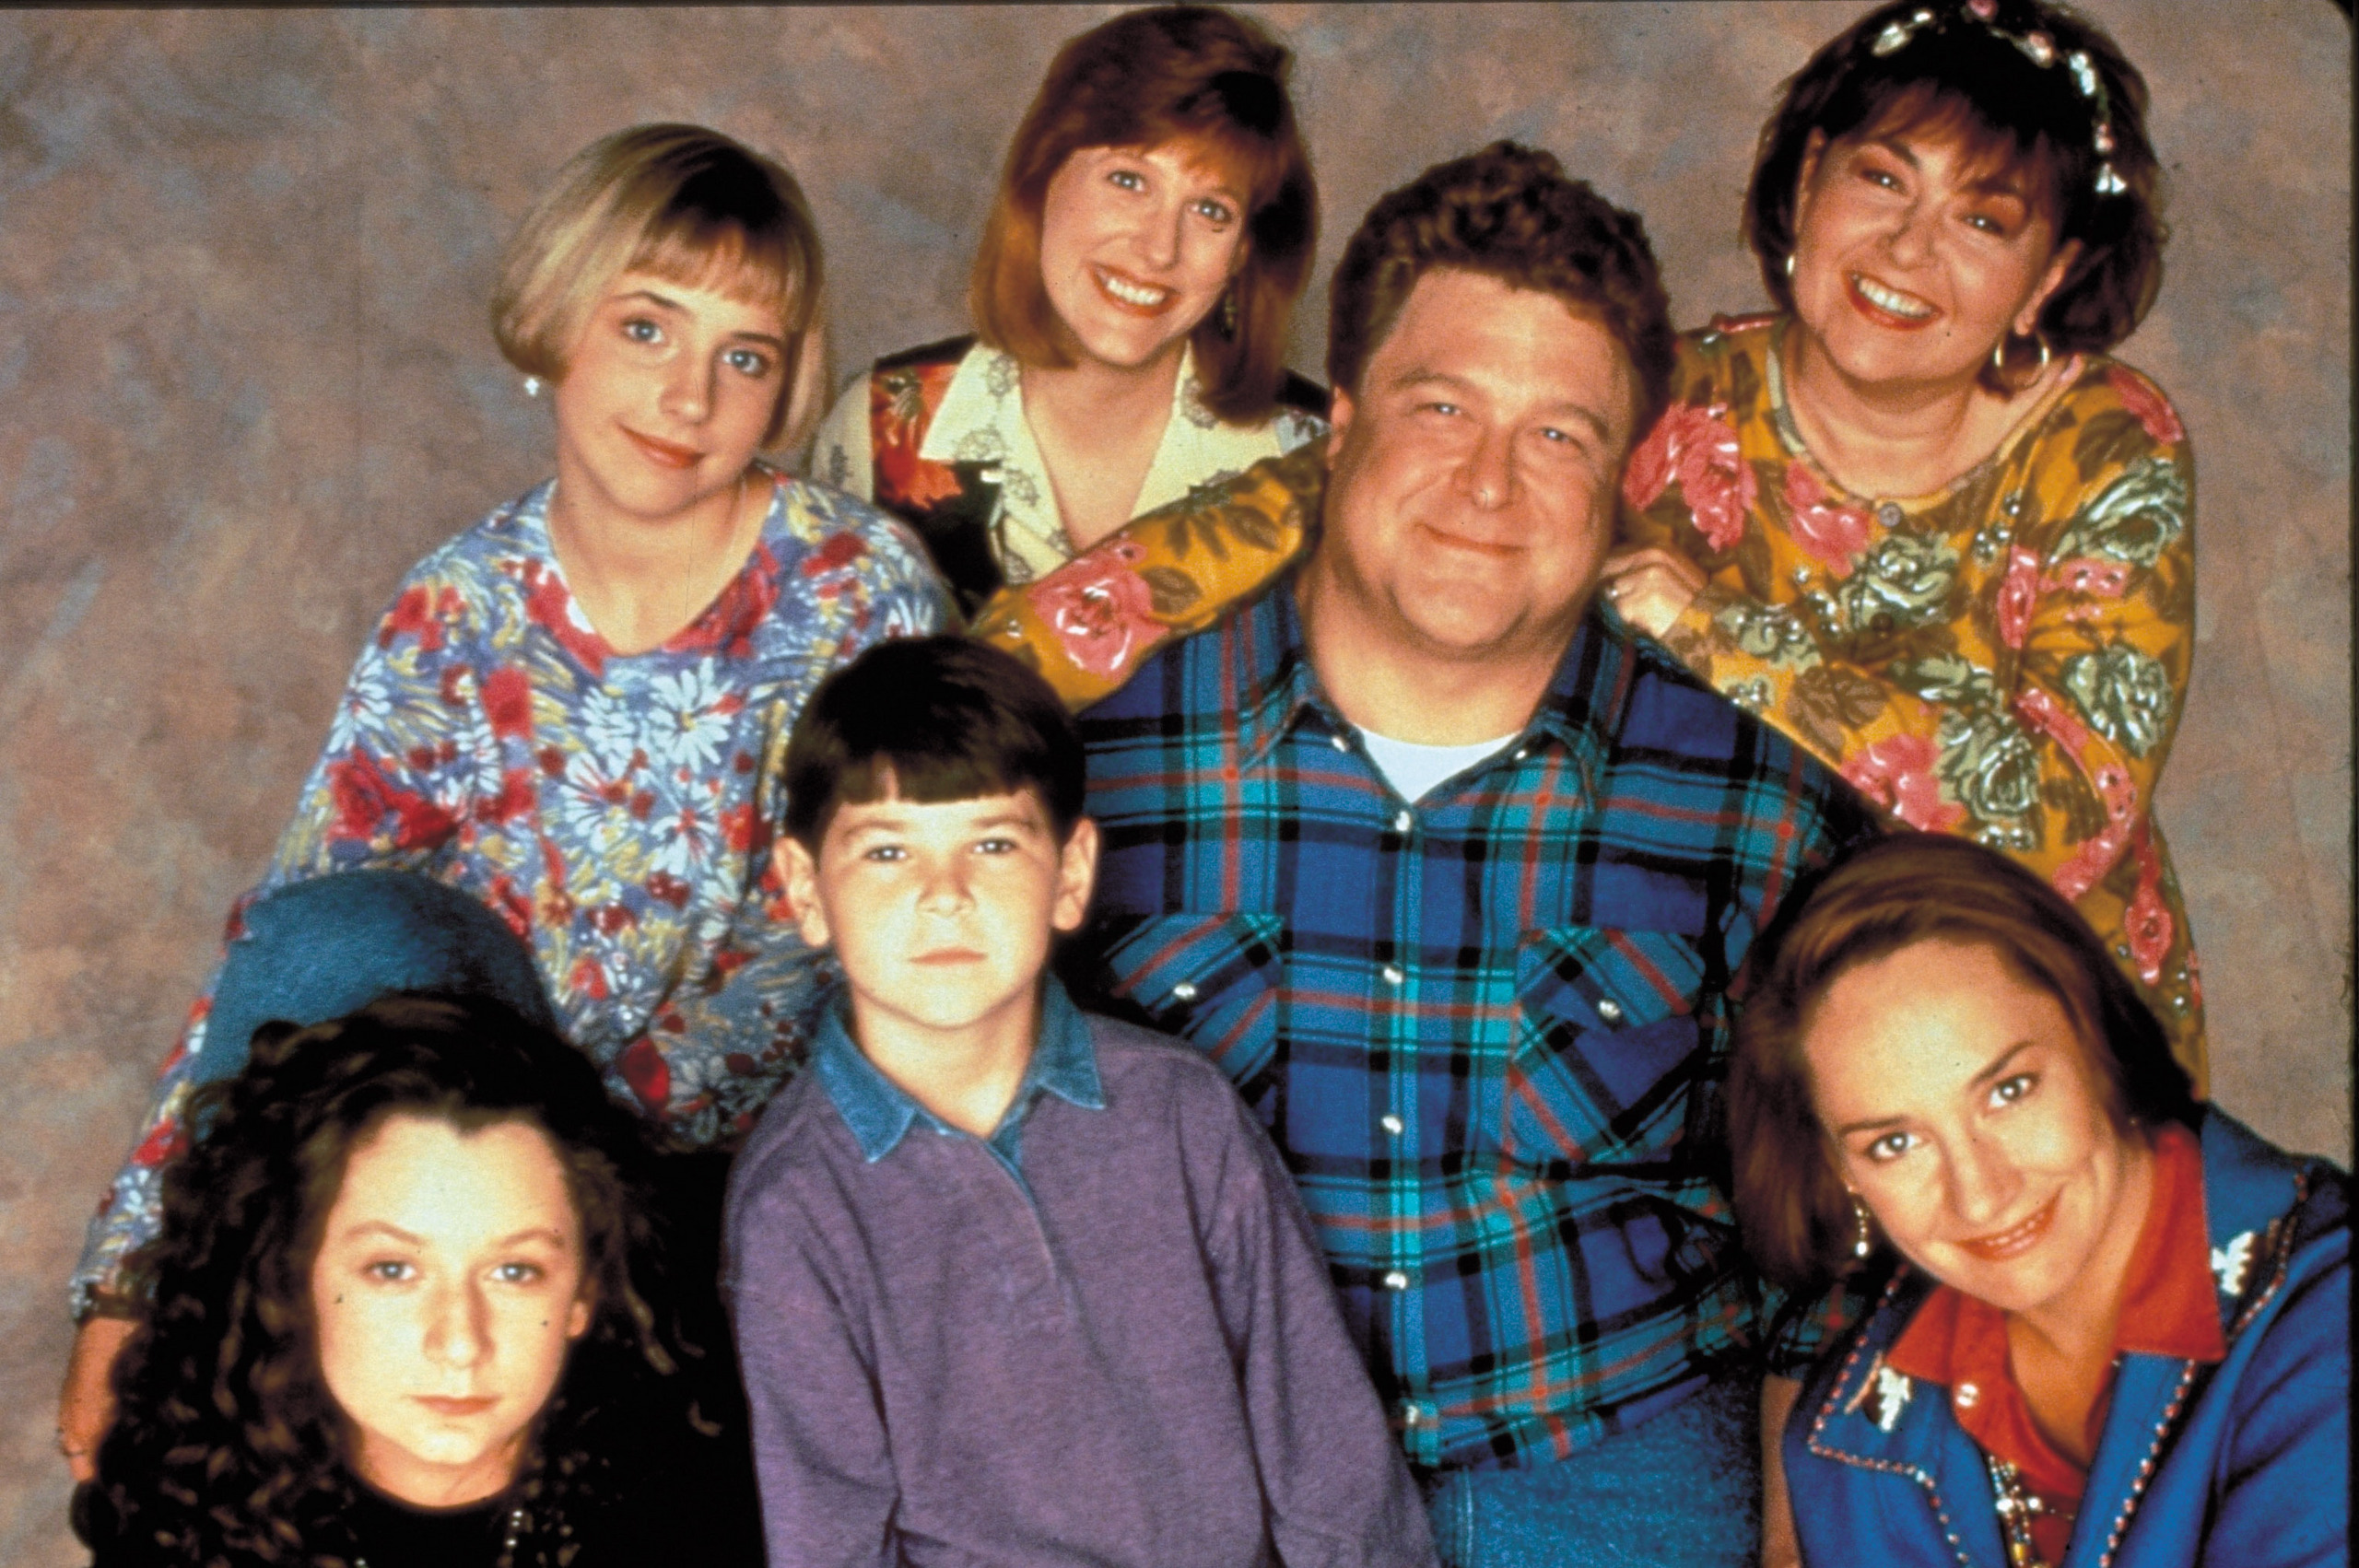 Roseanne Show Cast (1992)